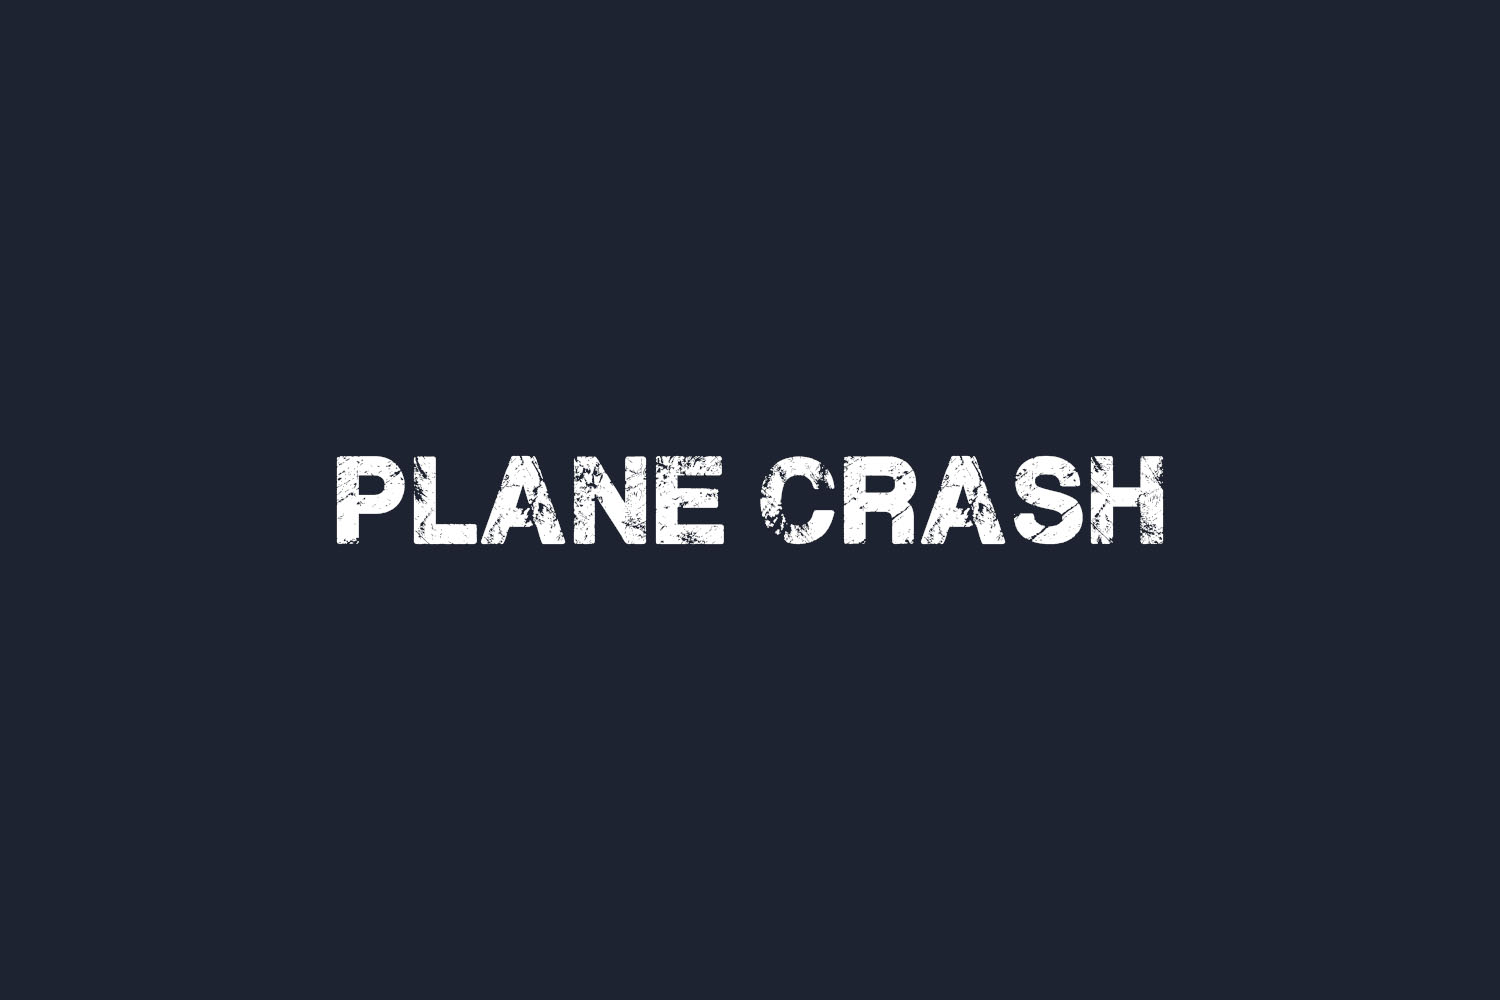 Plane Crash Free Font